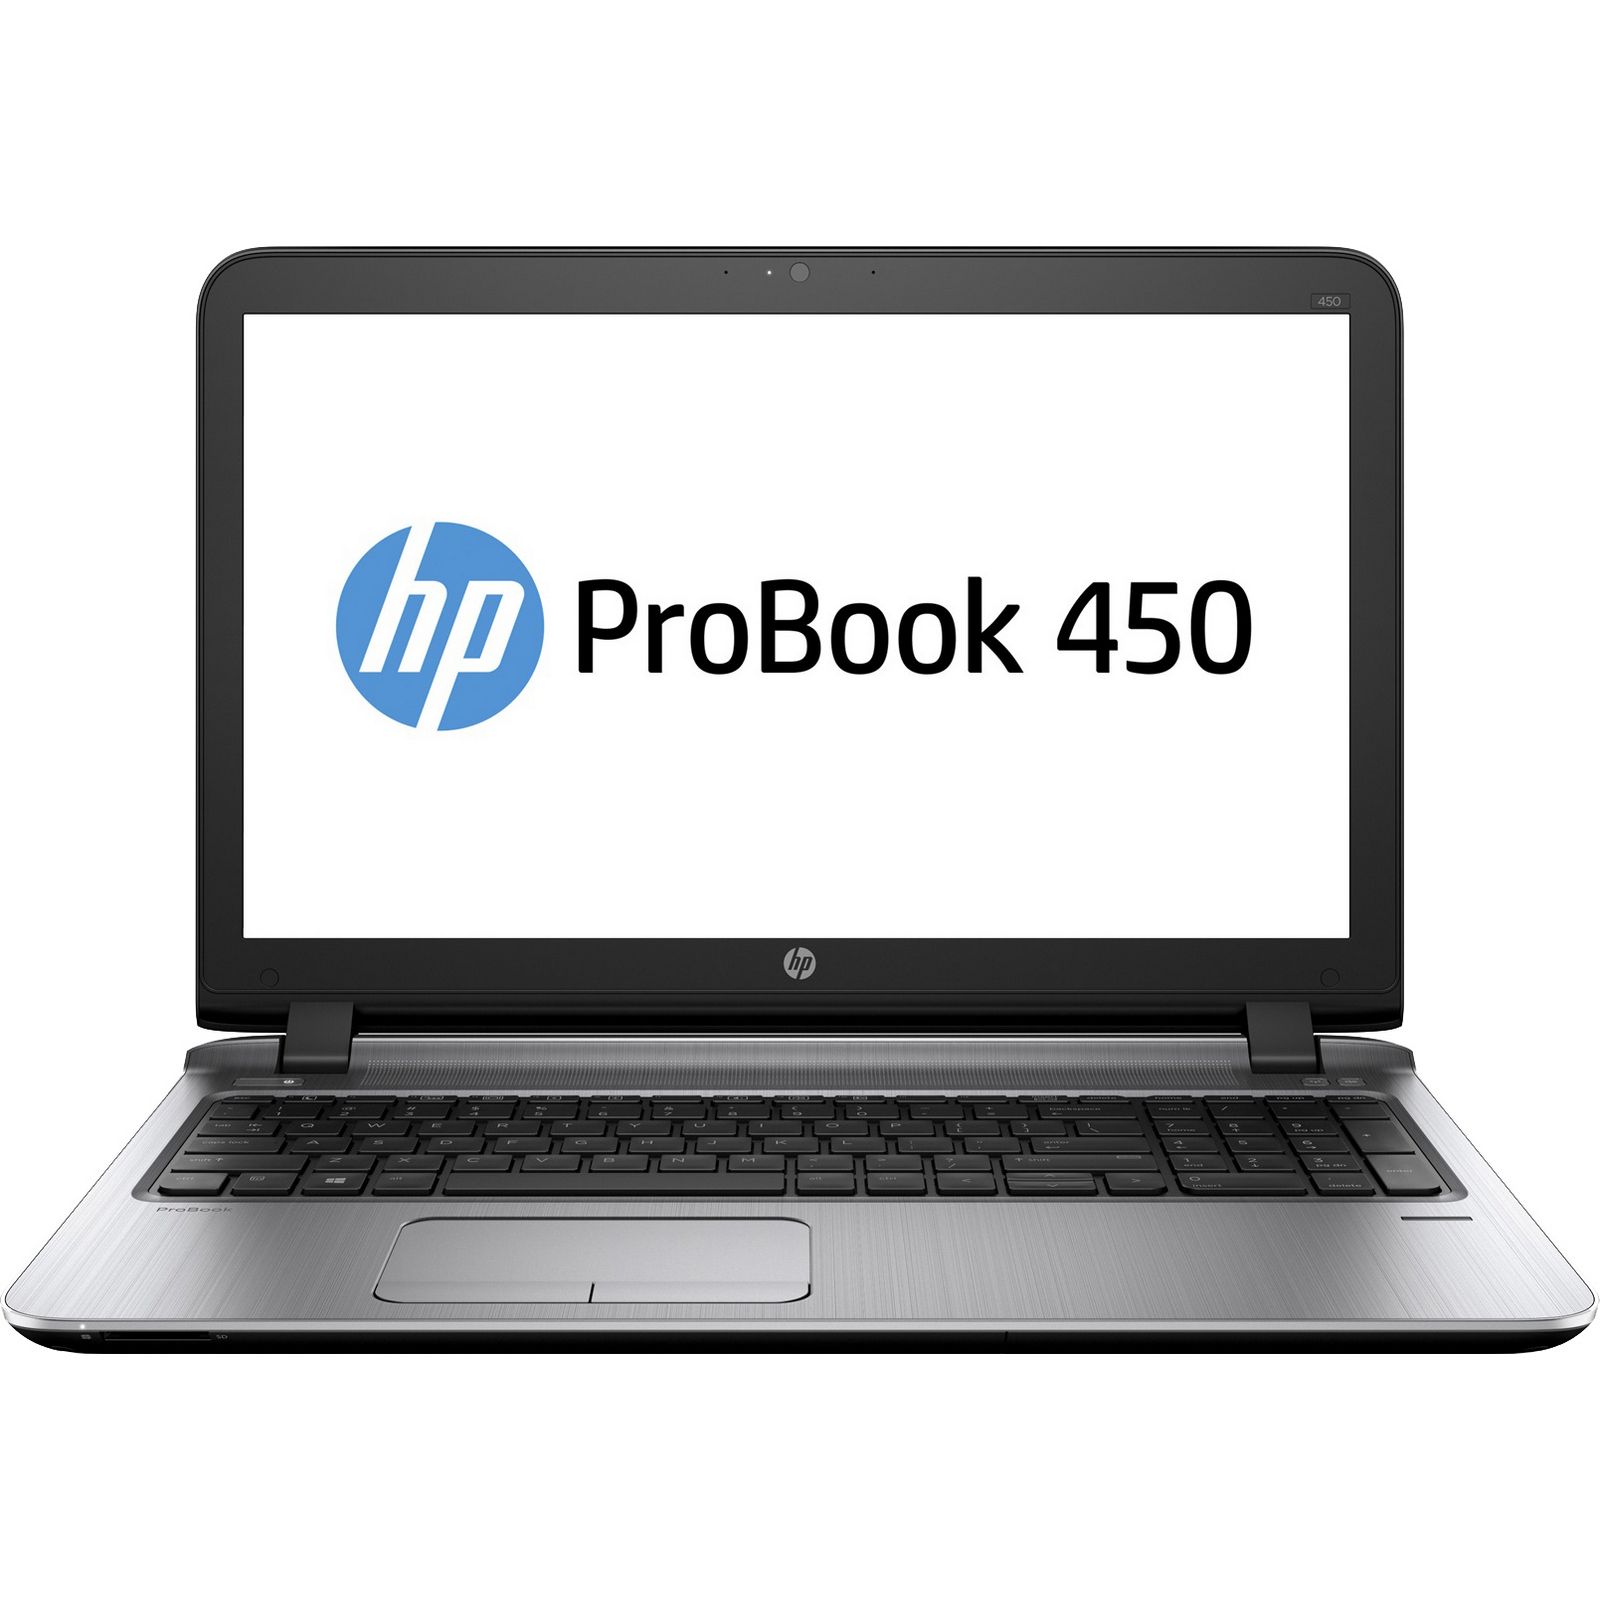 Laptop HP ProBook 450 G3, Intel Core i5-6200U, 4GB DDR3, HDD 1TB, AMD Radeon R7 M340 2GB, Free DOS